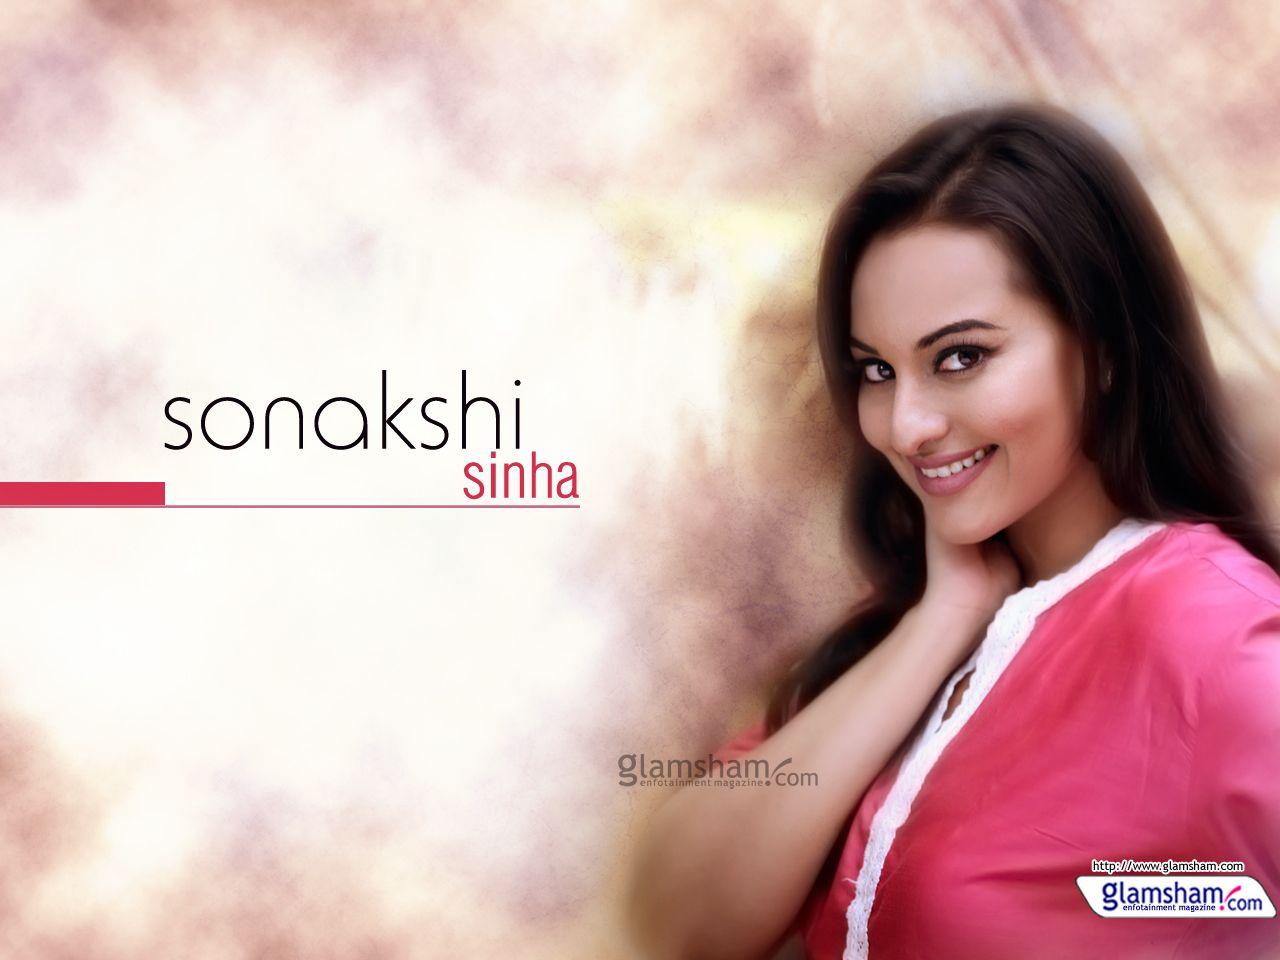 Sonakshi Sinha high resolution image 51917